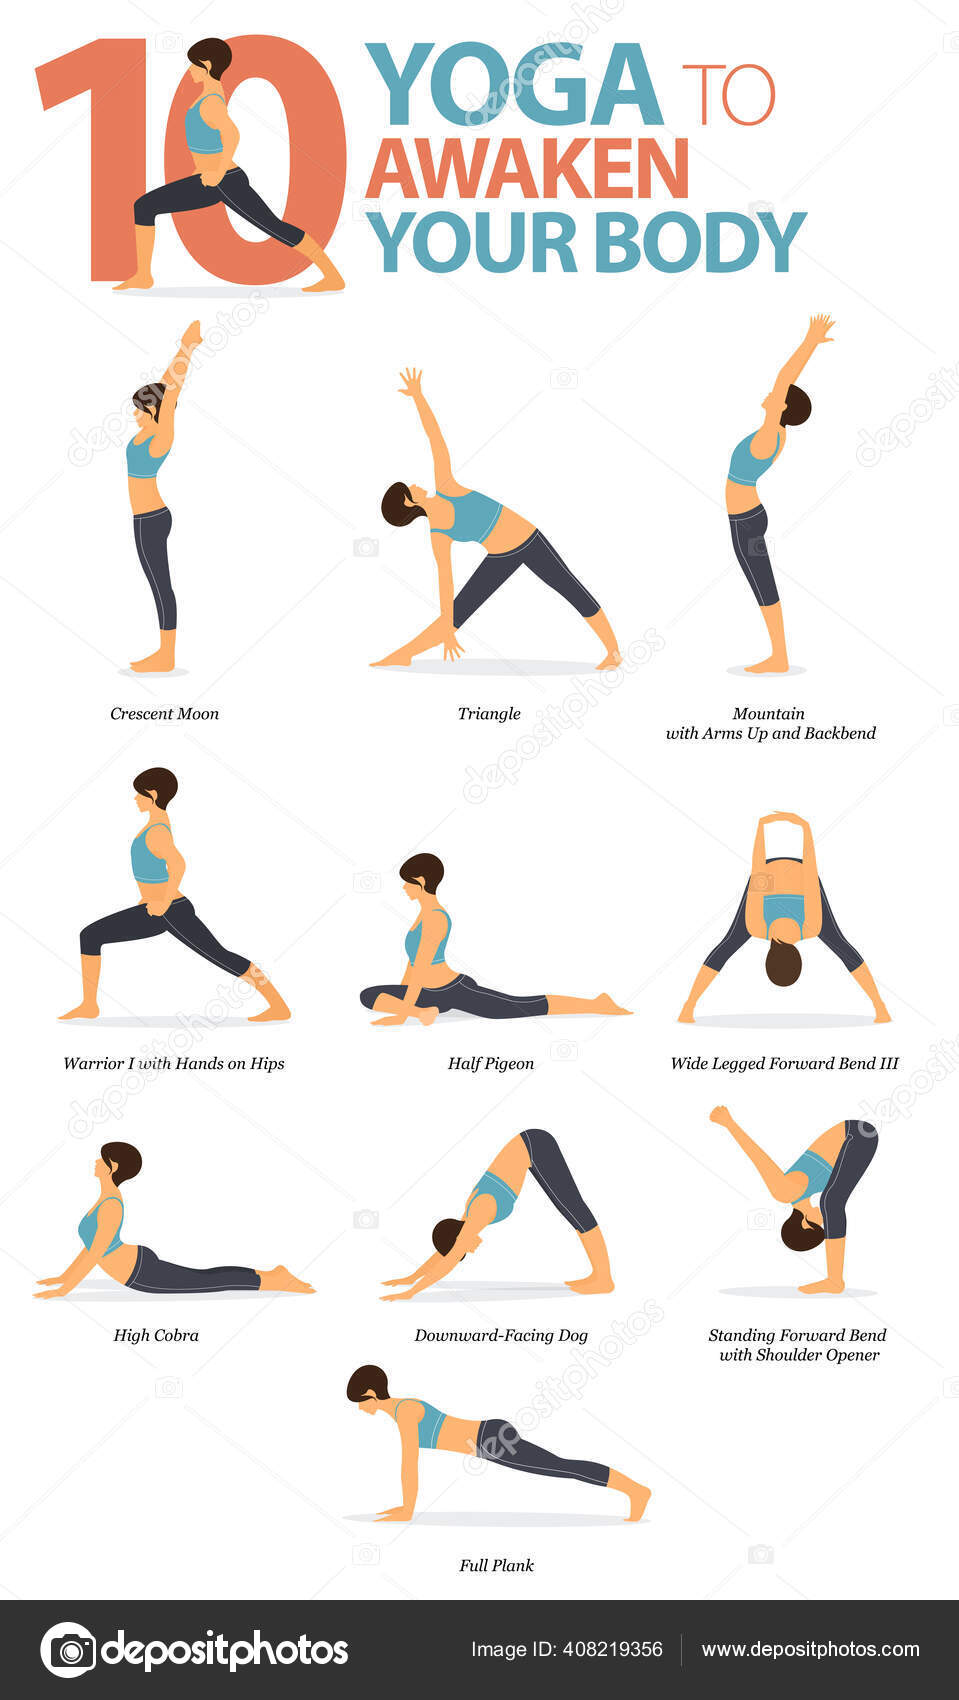 https://st4.depositphotos.com/11342704/40821/v/1600/depositphotos_408219356-stock-illustration-infographic-yoga-poses-workout-home.jpg